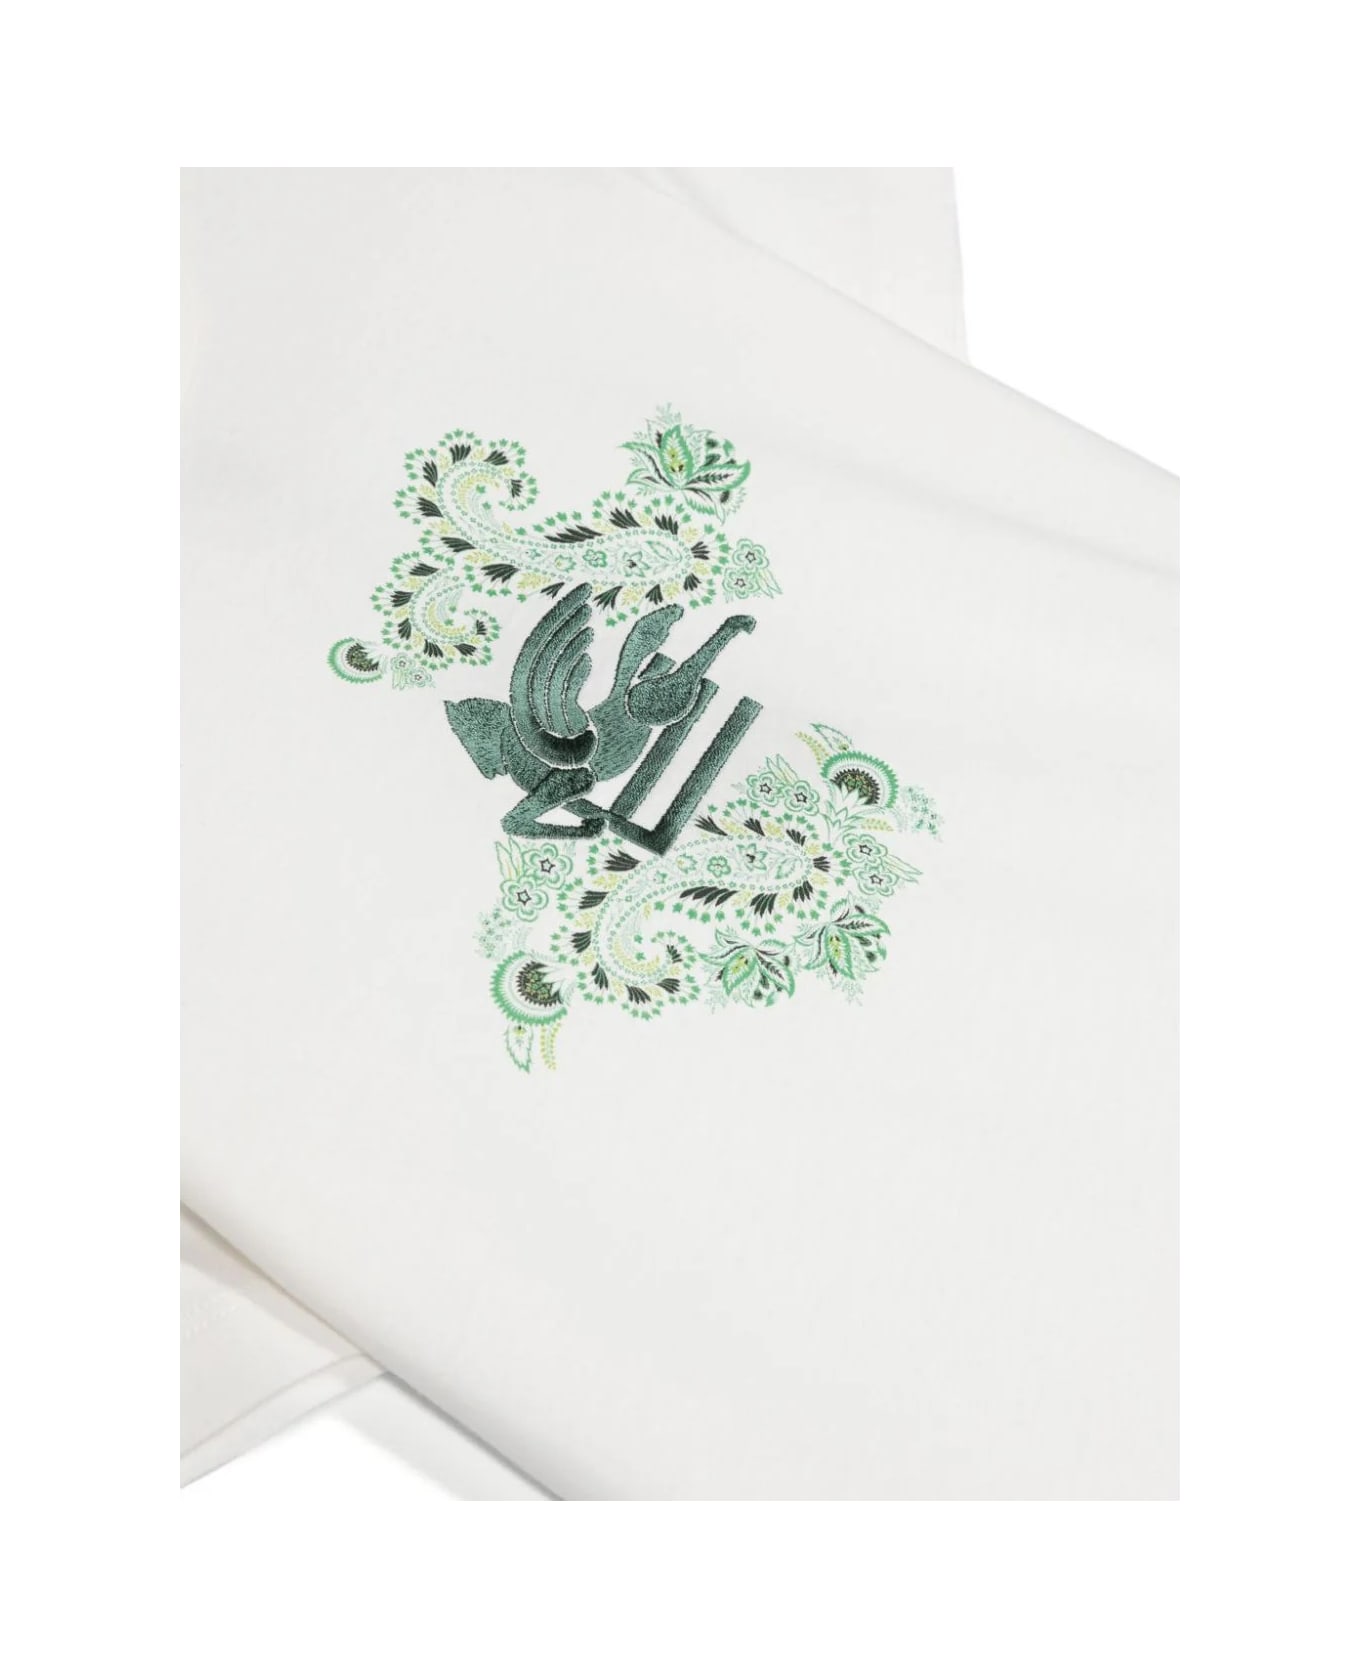 Etro White T-shirt With Green Pegasus Motif - Green